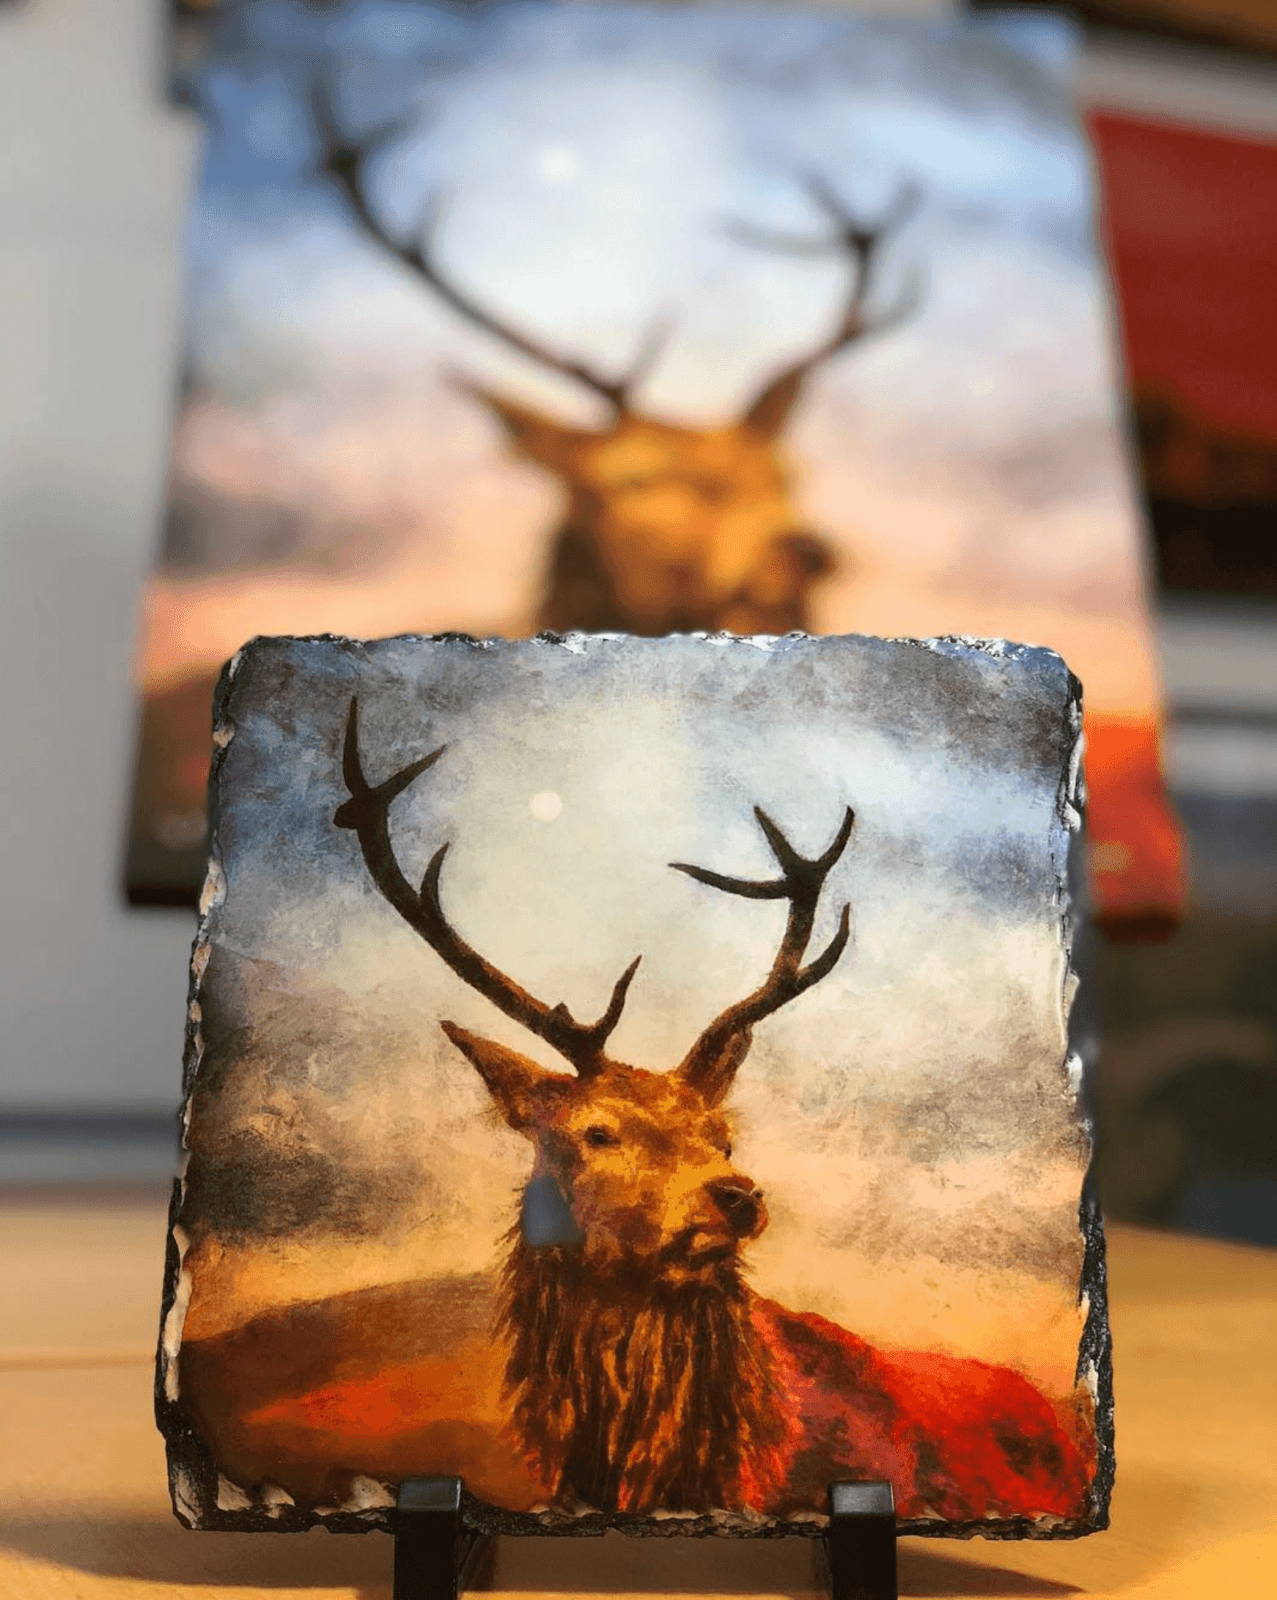 A Moonlit Highland Wood ii Slate Art-Slate Art-Scottish Highlands & Lowlands Art Gallery-Paintings, Prints, Homeware, Art Gifts From Scotland By Scottish Artist Kevin Hunter